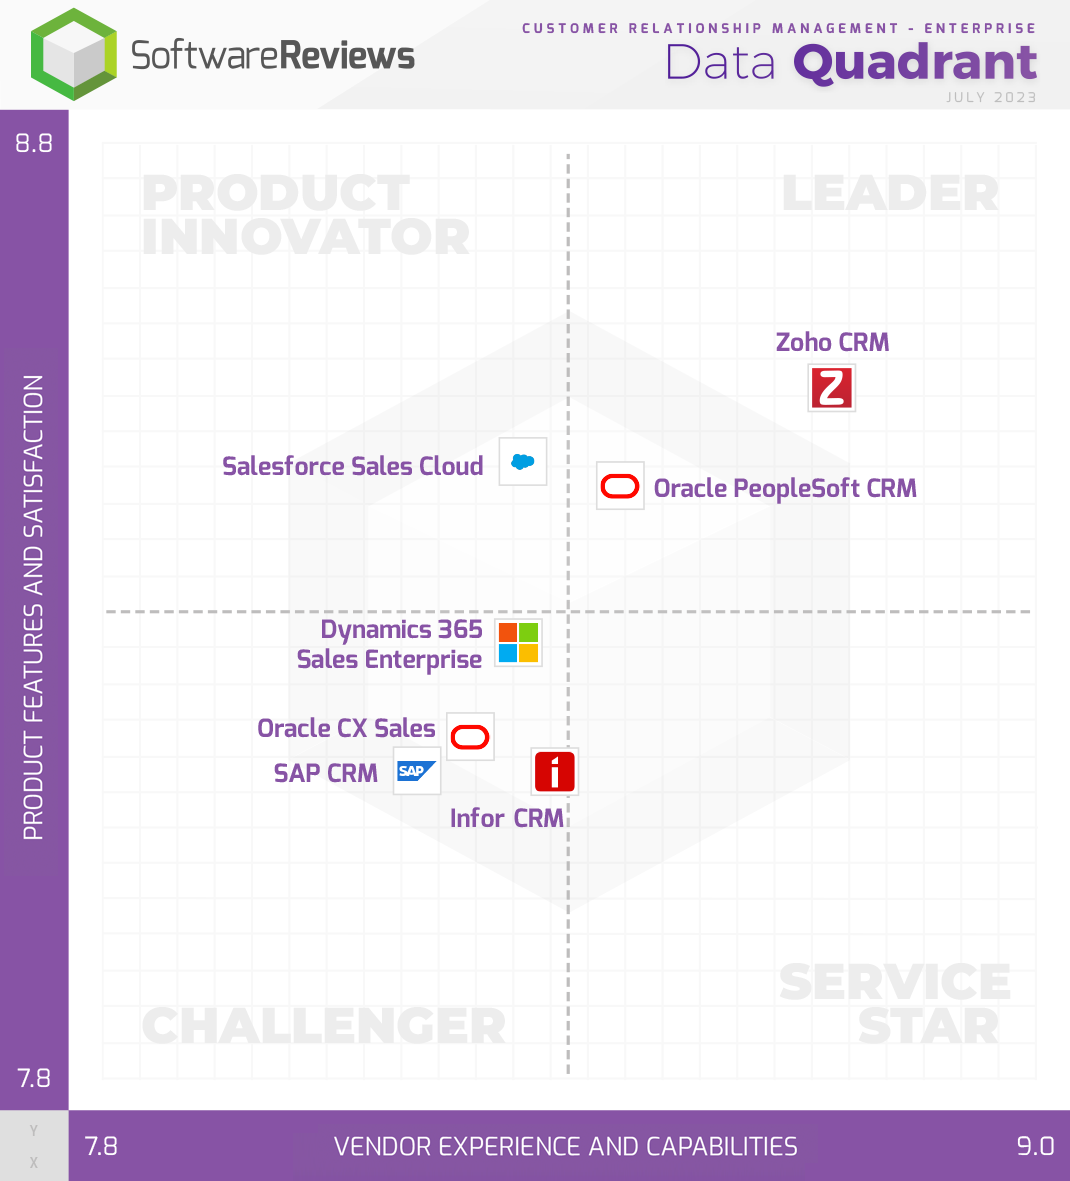 Customer Relationship Management - Enterprise Data Quadrant